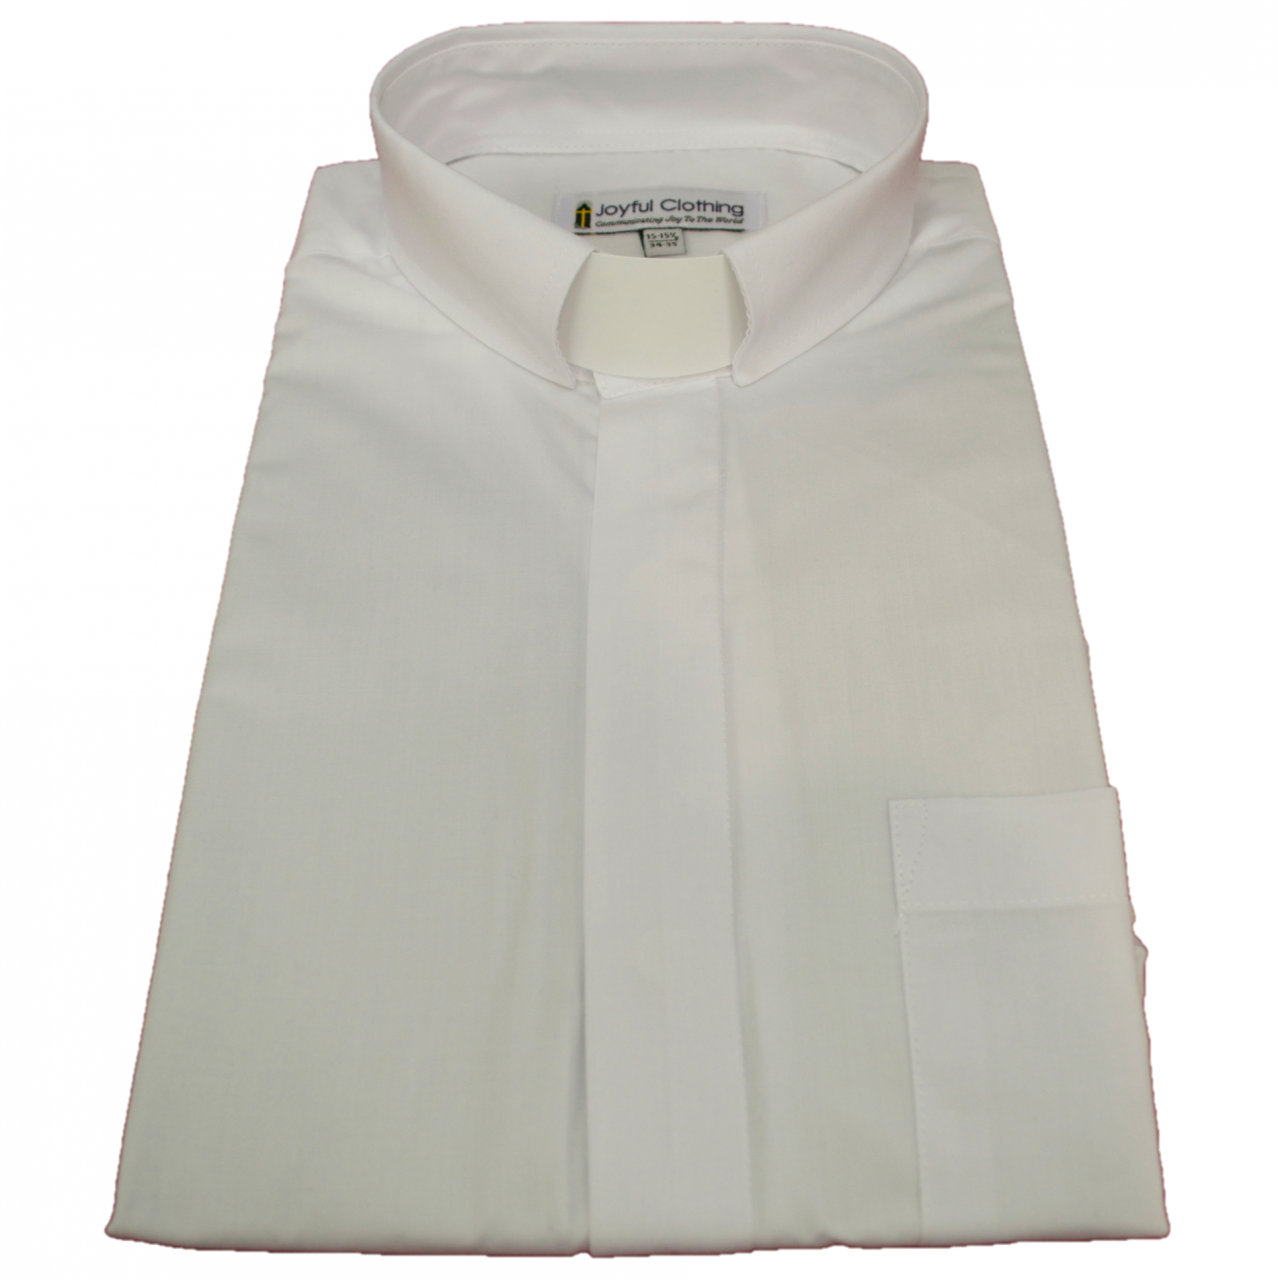 103. Men's Long-Sleeve Tab-Collar Clergy Shirt - White